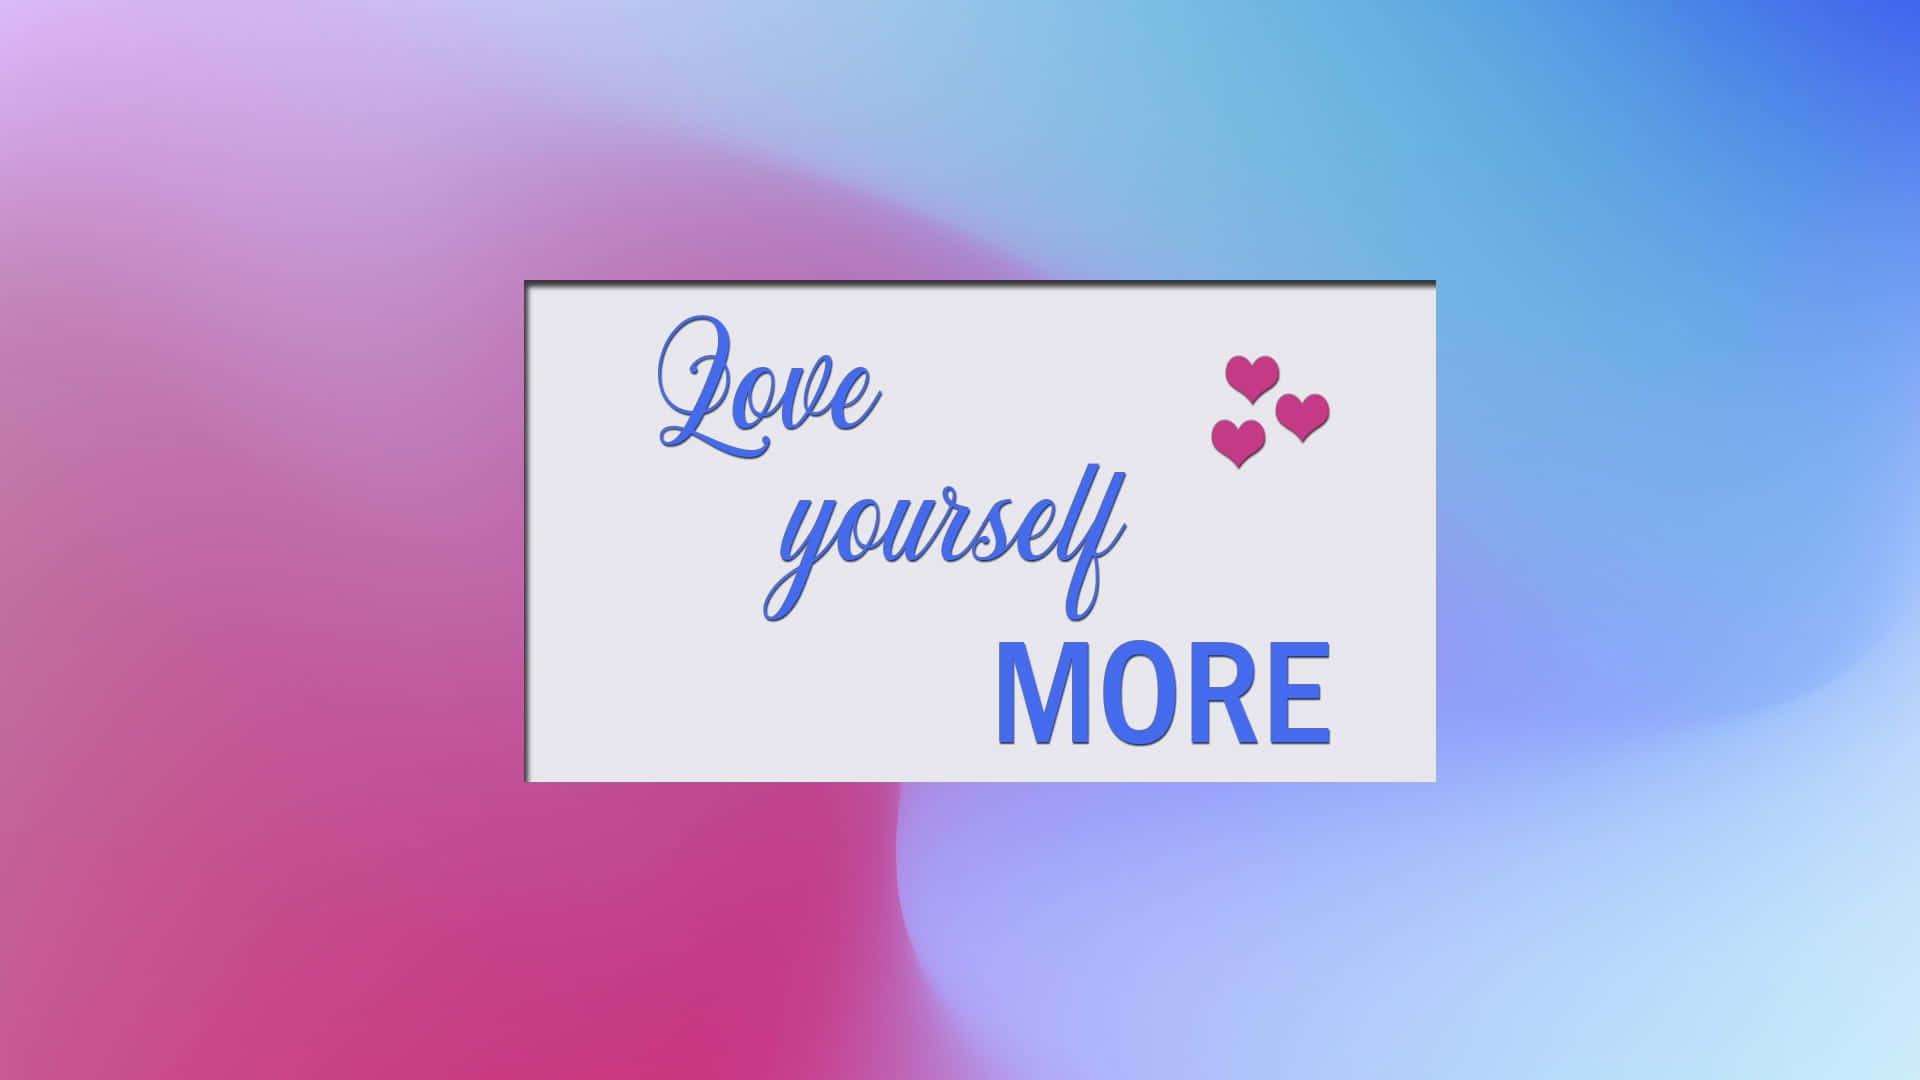 Love Yourself!